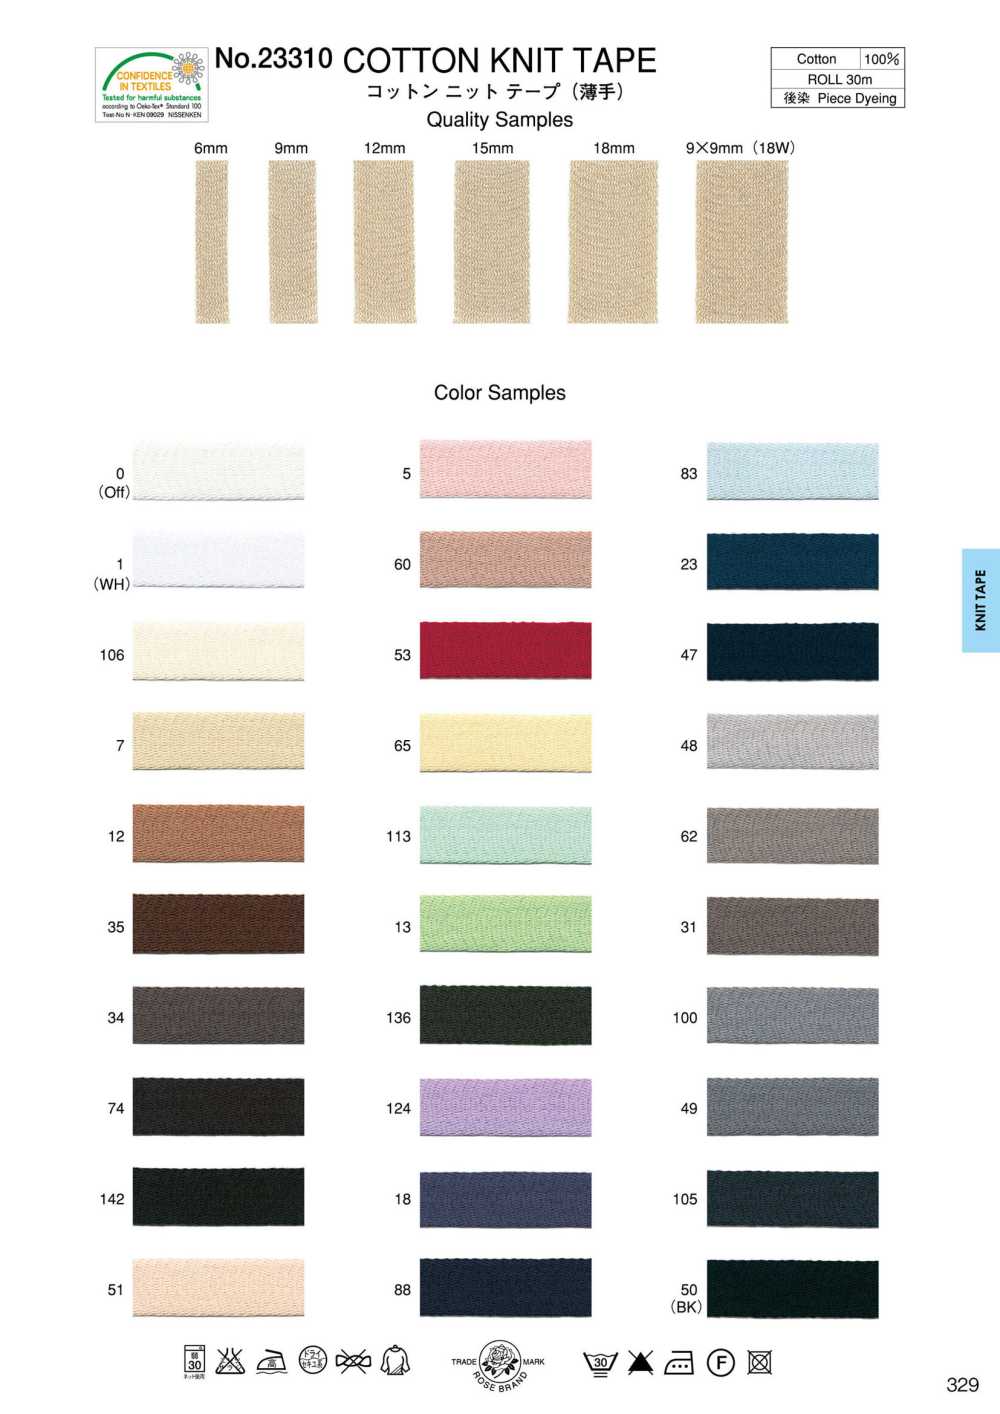 23310-SAMPLE 23310 Cotton Knit Tape (Thin) Sample Card ROSE BRAND (Marushin)